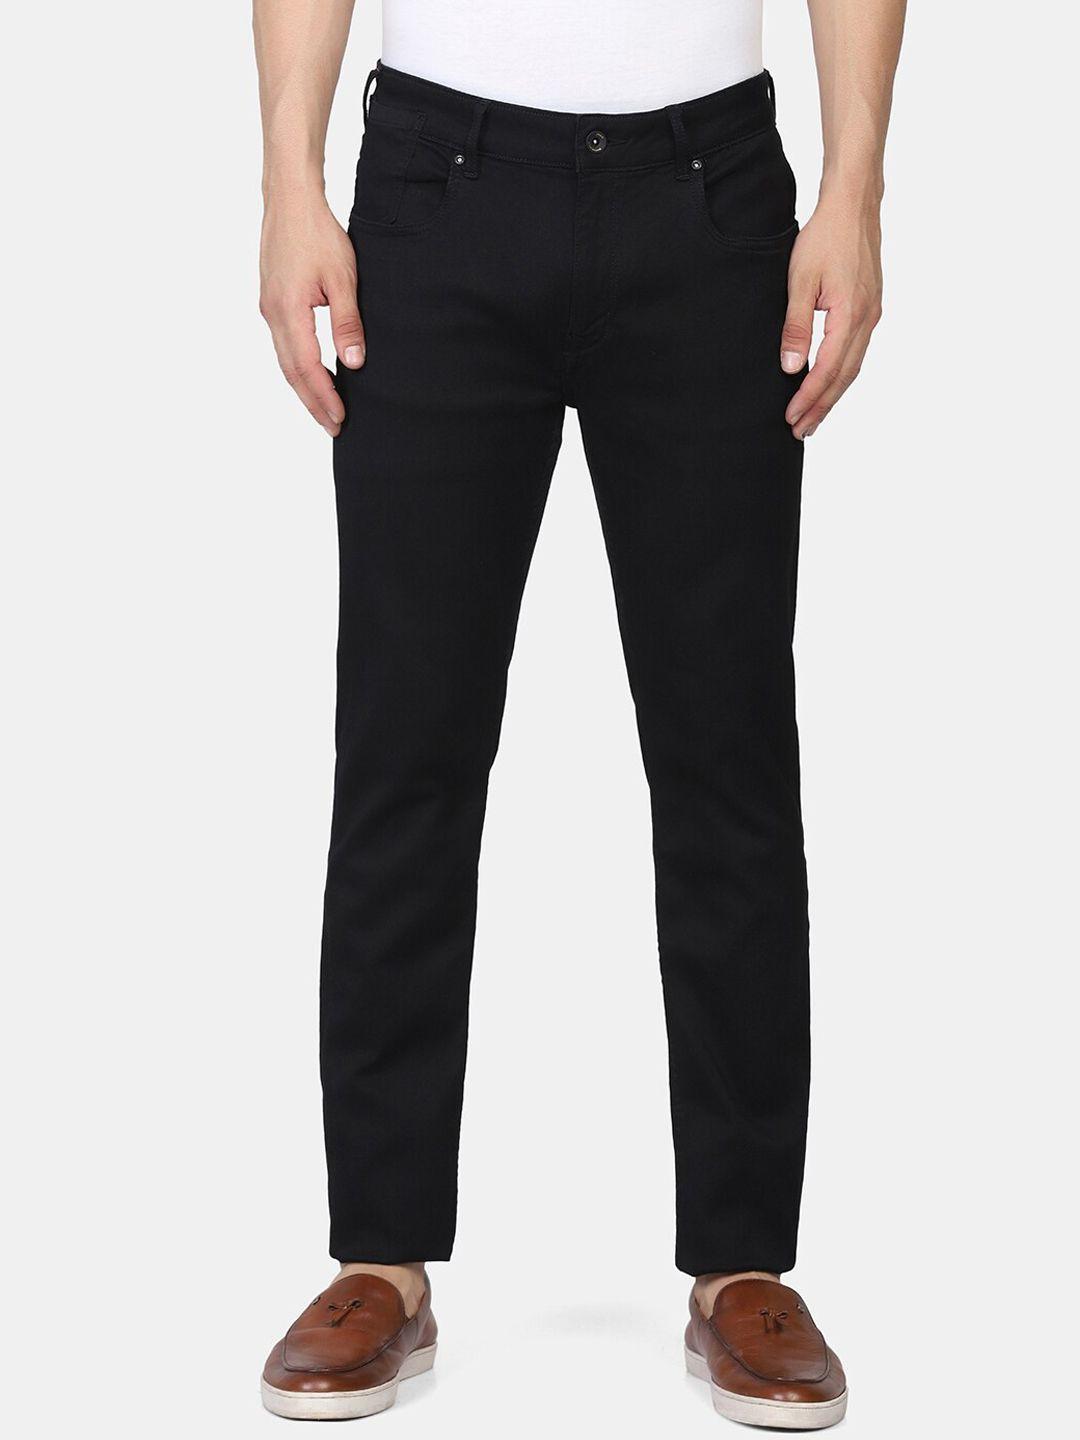 blackberrys-men-black-skinny-fit-low-rise-stretchable-jeans